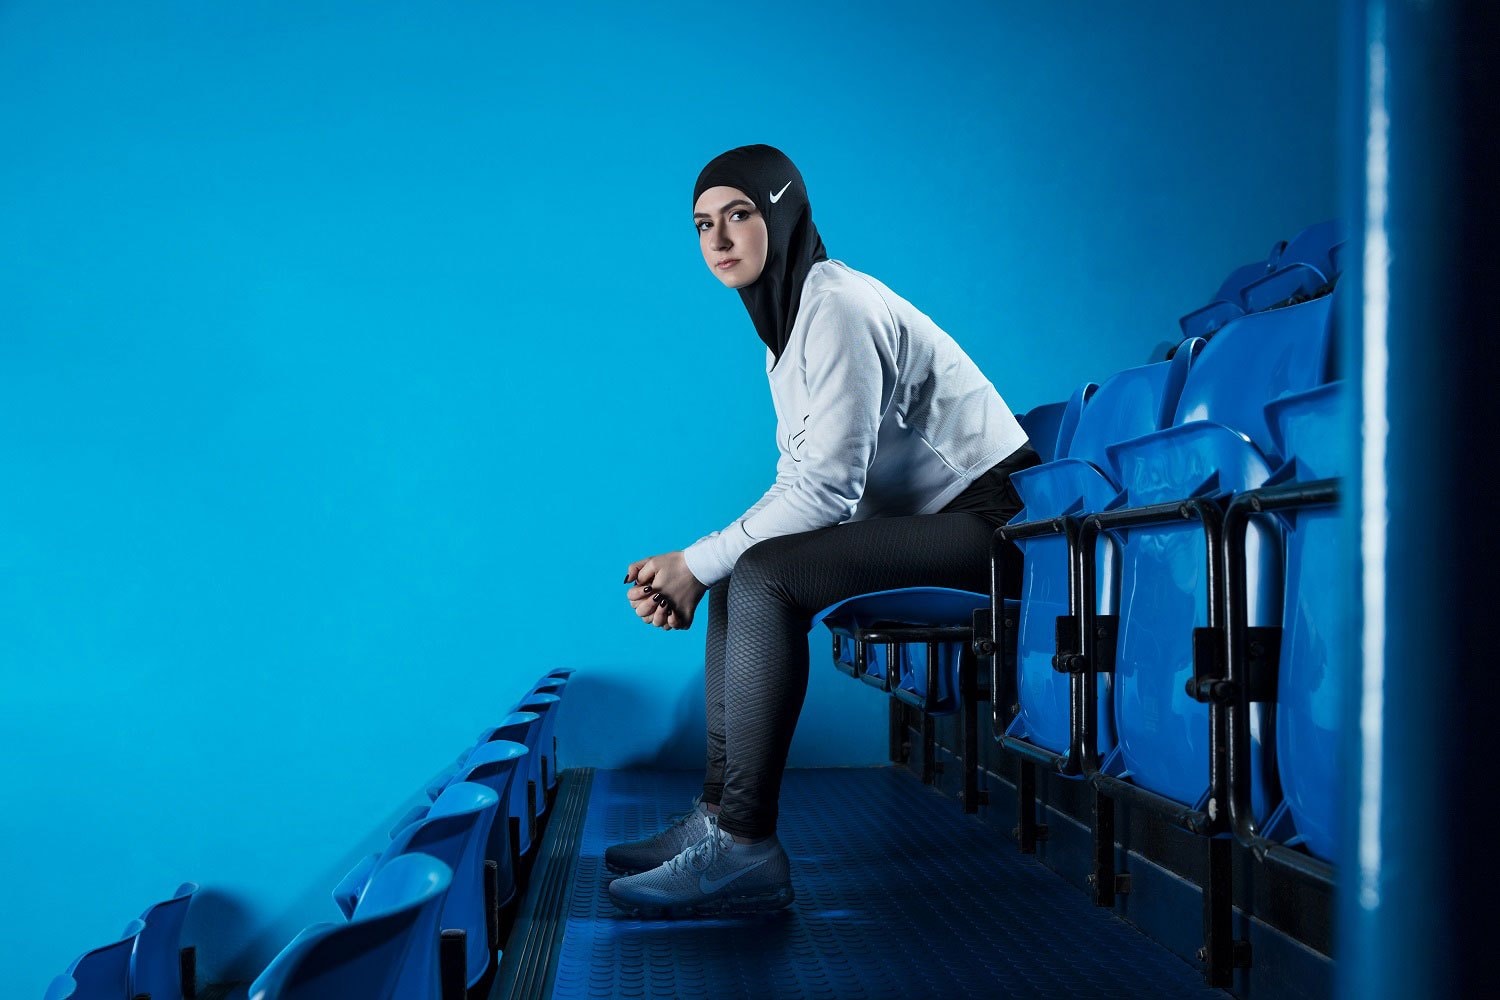 Nike 推出運動專用伊斯蘭頭巾「Pro Hijab」